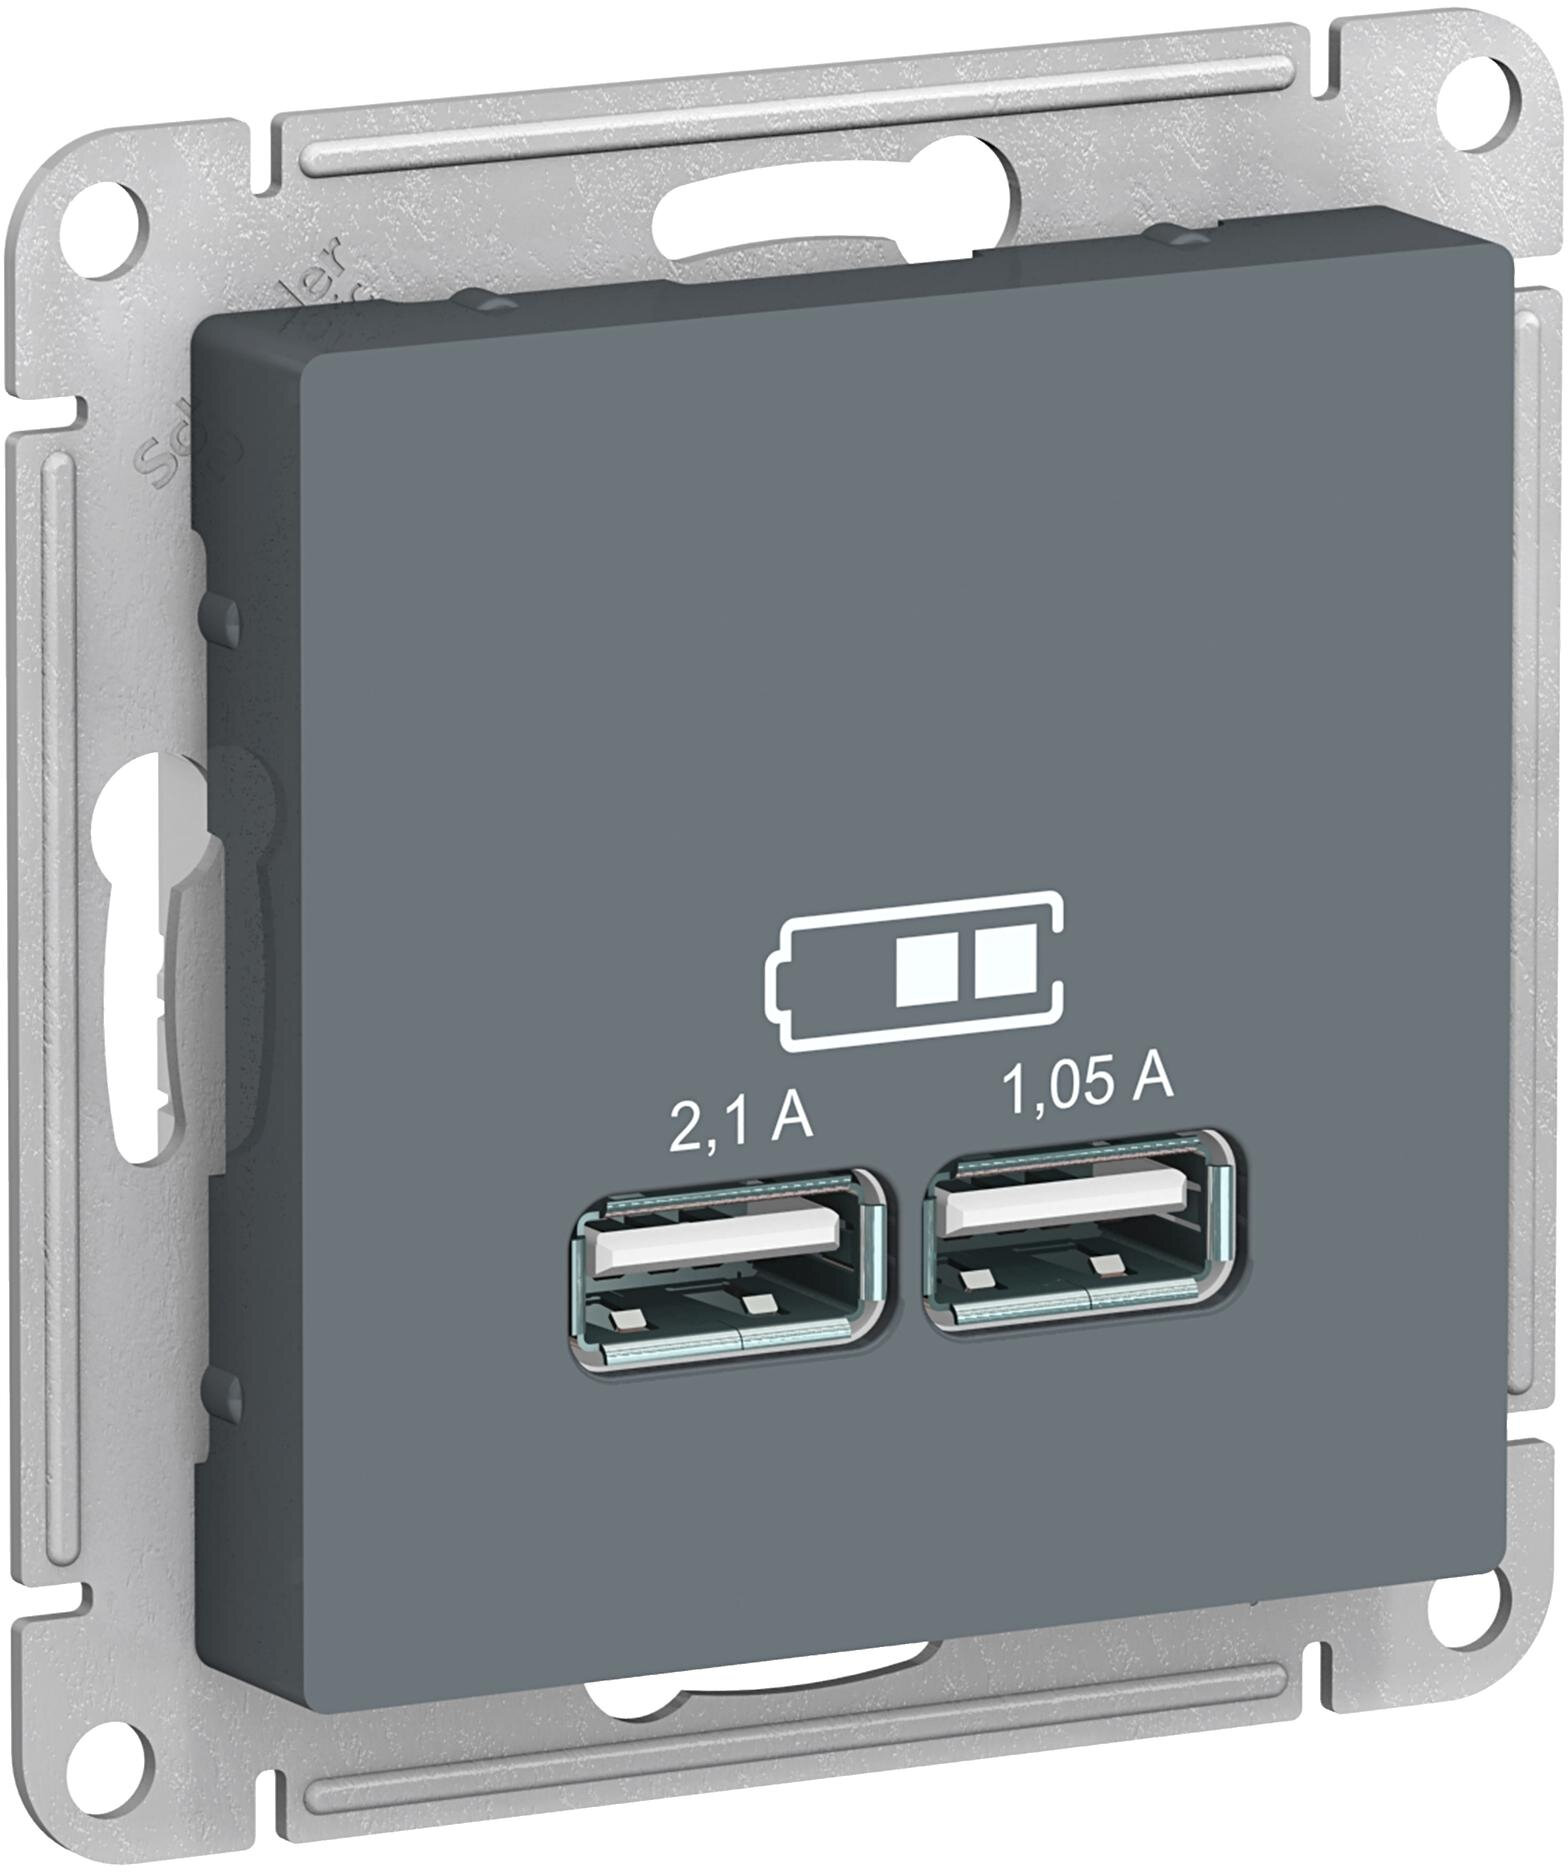 USB-зарядка Atlas Design 5В, 1х2.1А или 2x1.05A (грифель)